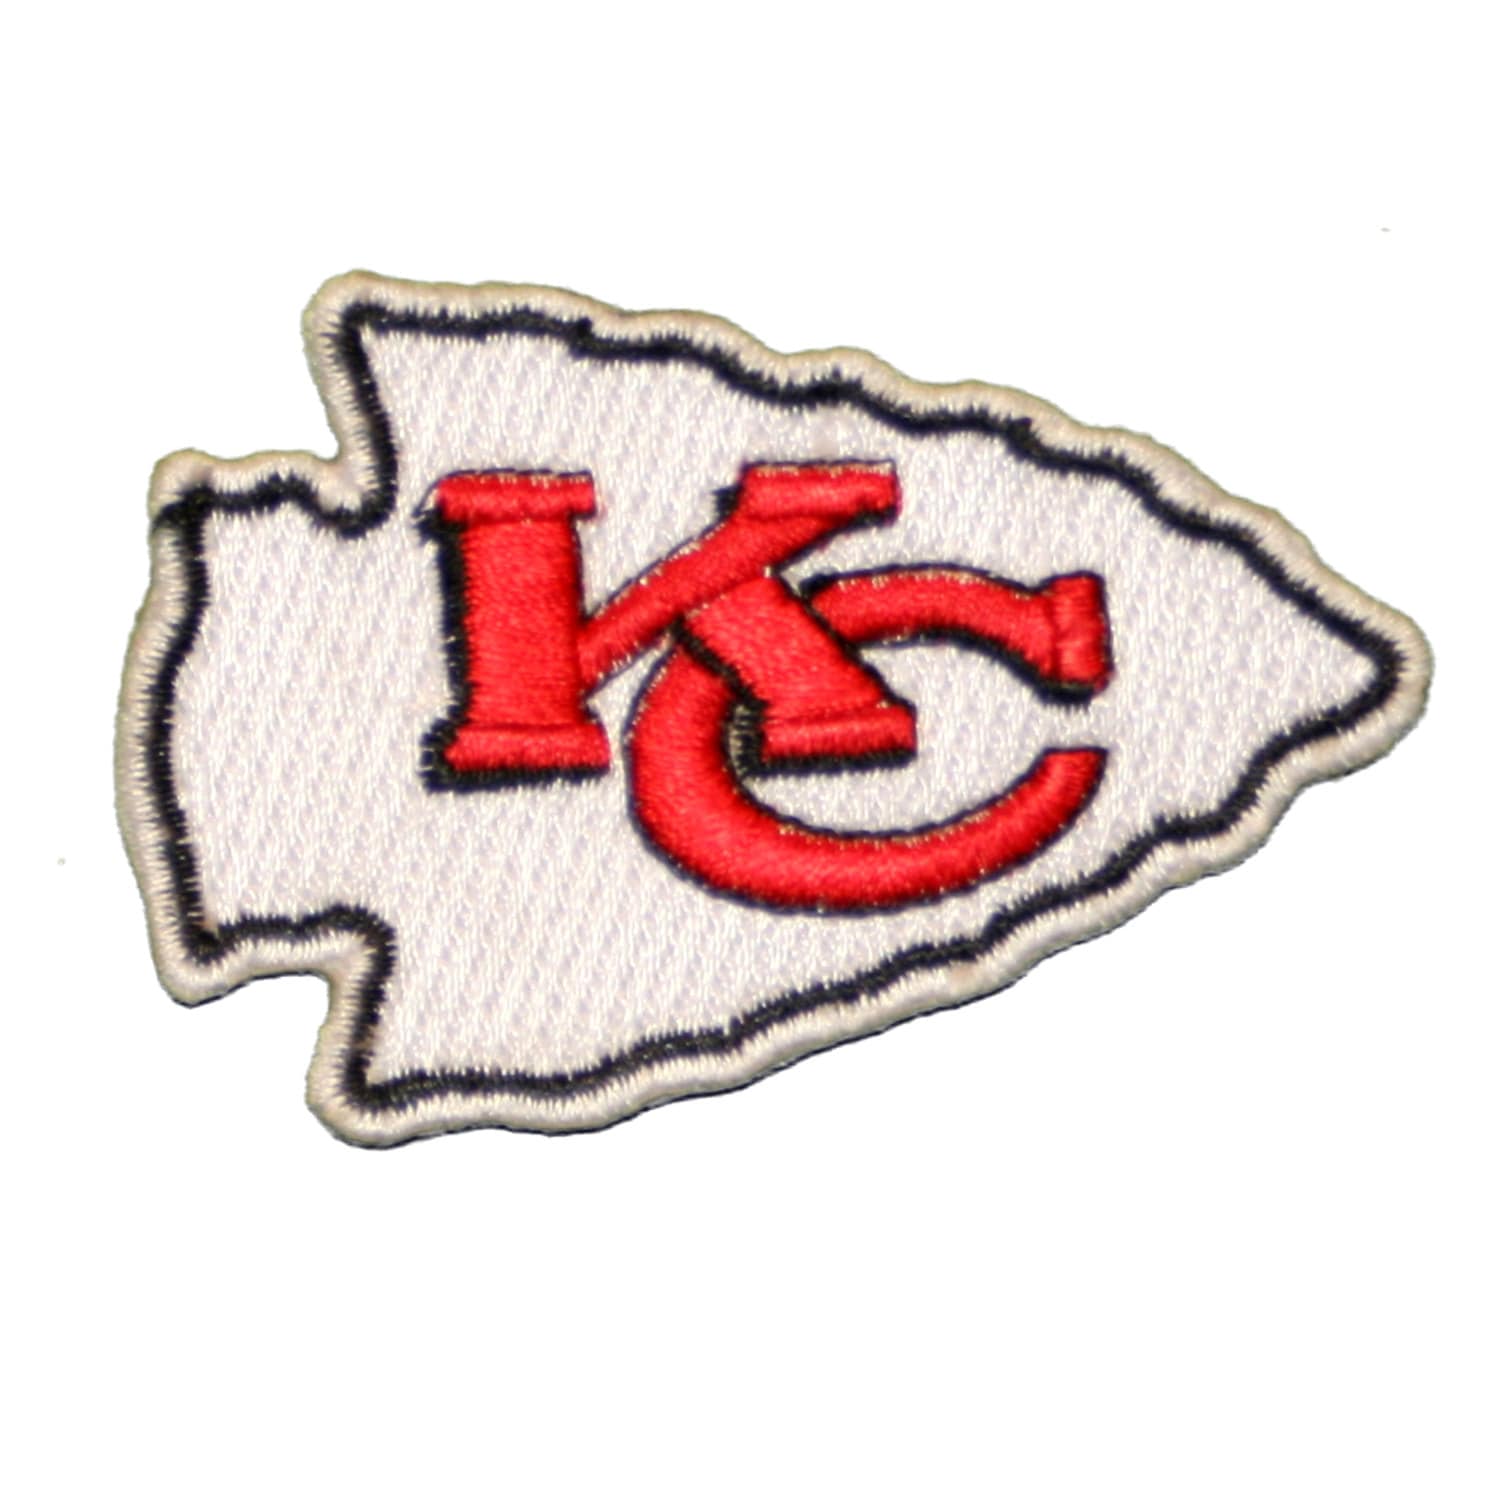 Kansas City Chiefs iron on patch team logo size: 2.625